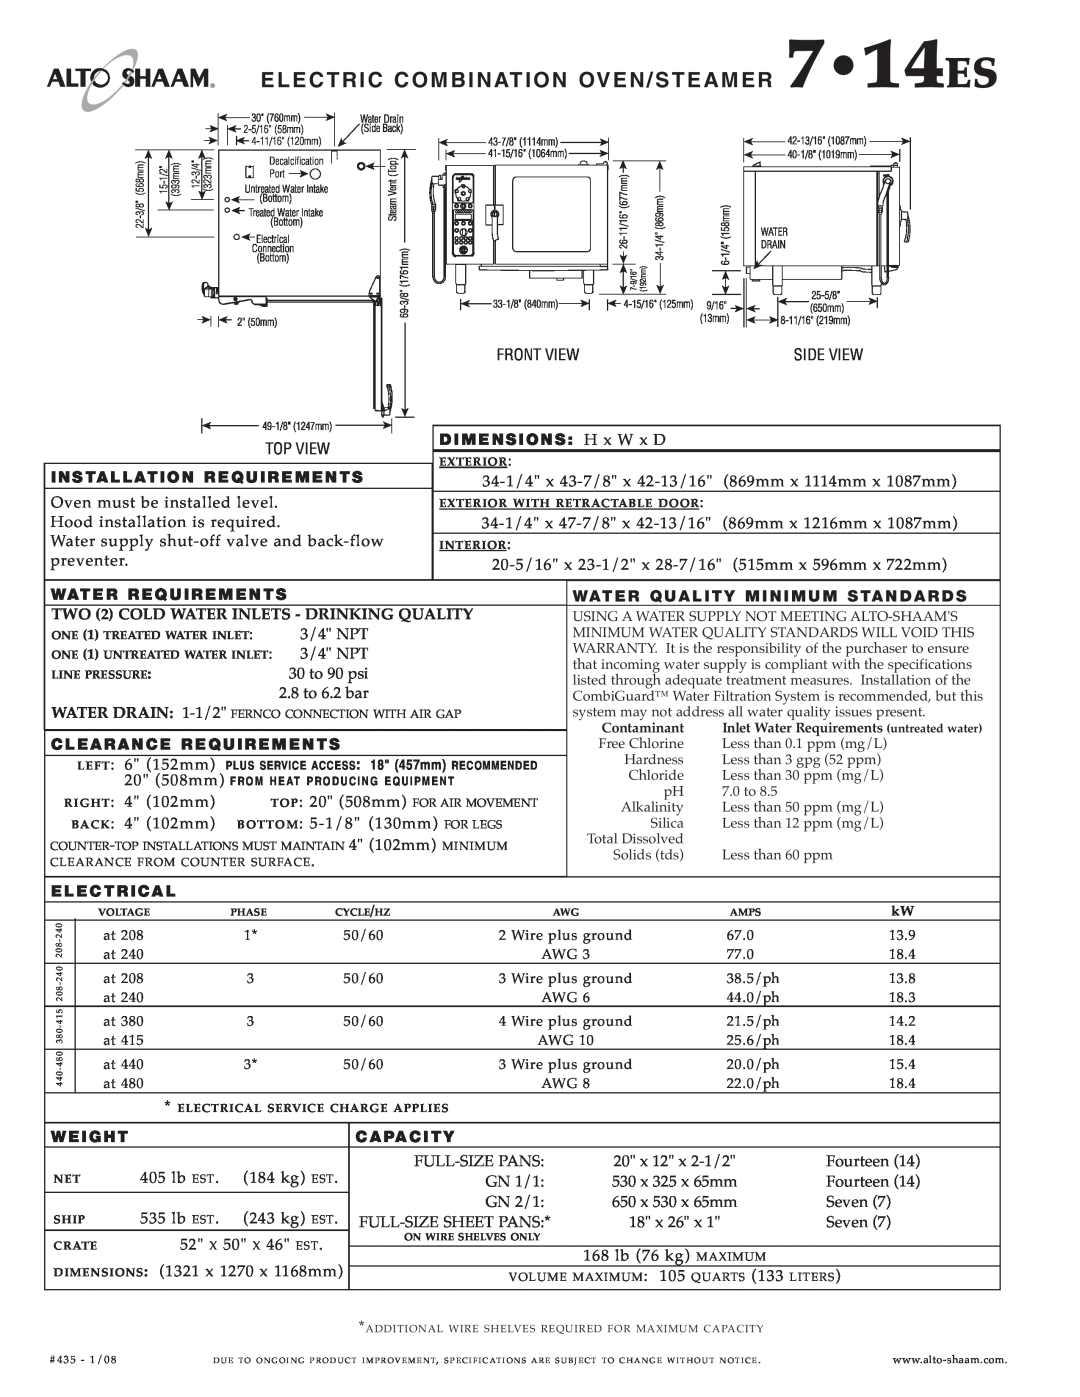 Alto-Shaam 7.14es specifications EL ECTR IC CO MB INAT ION O VEN/STEAMER 714ES 